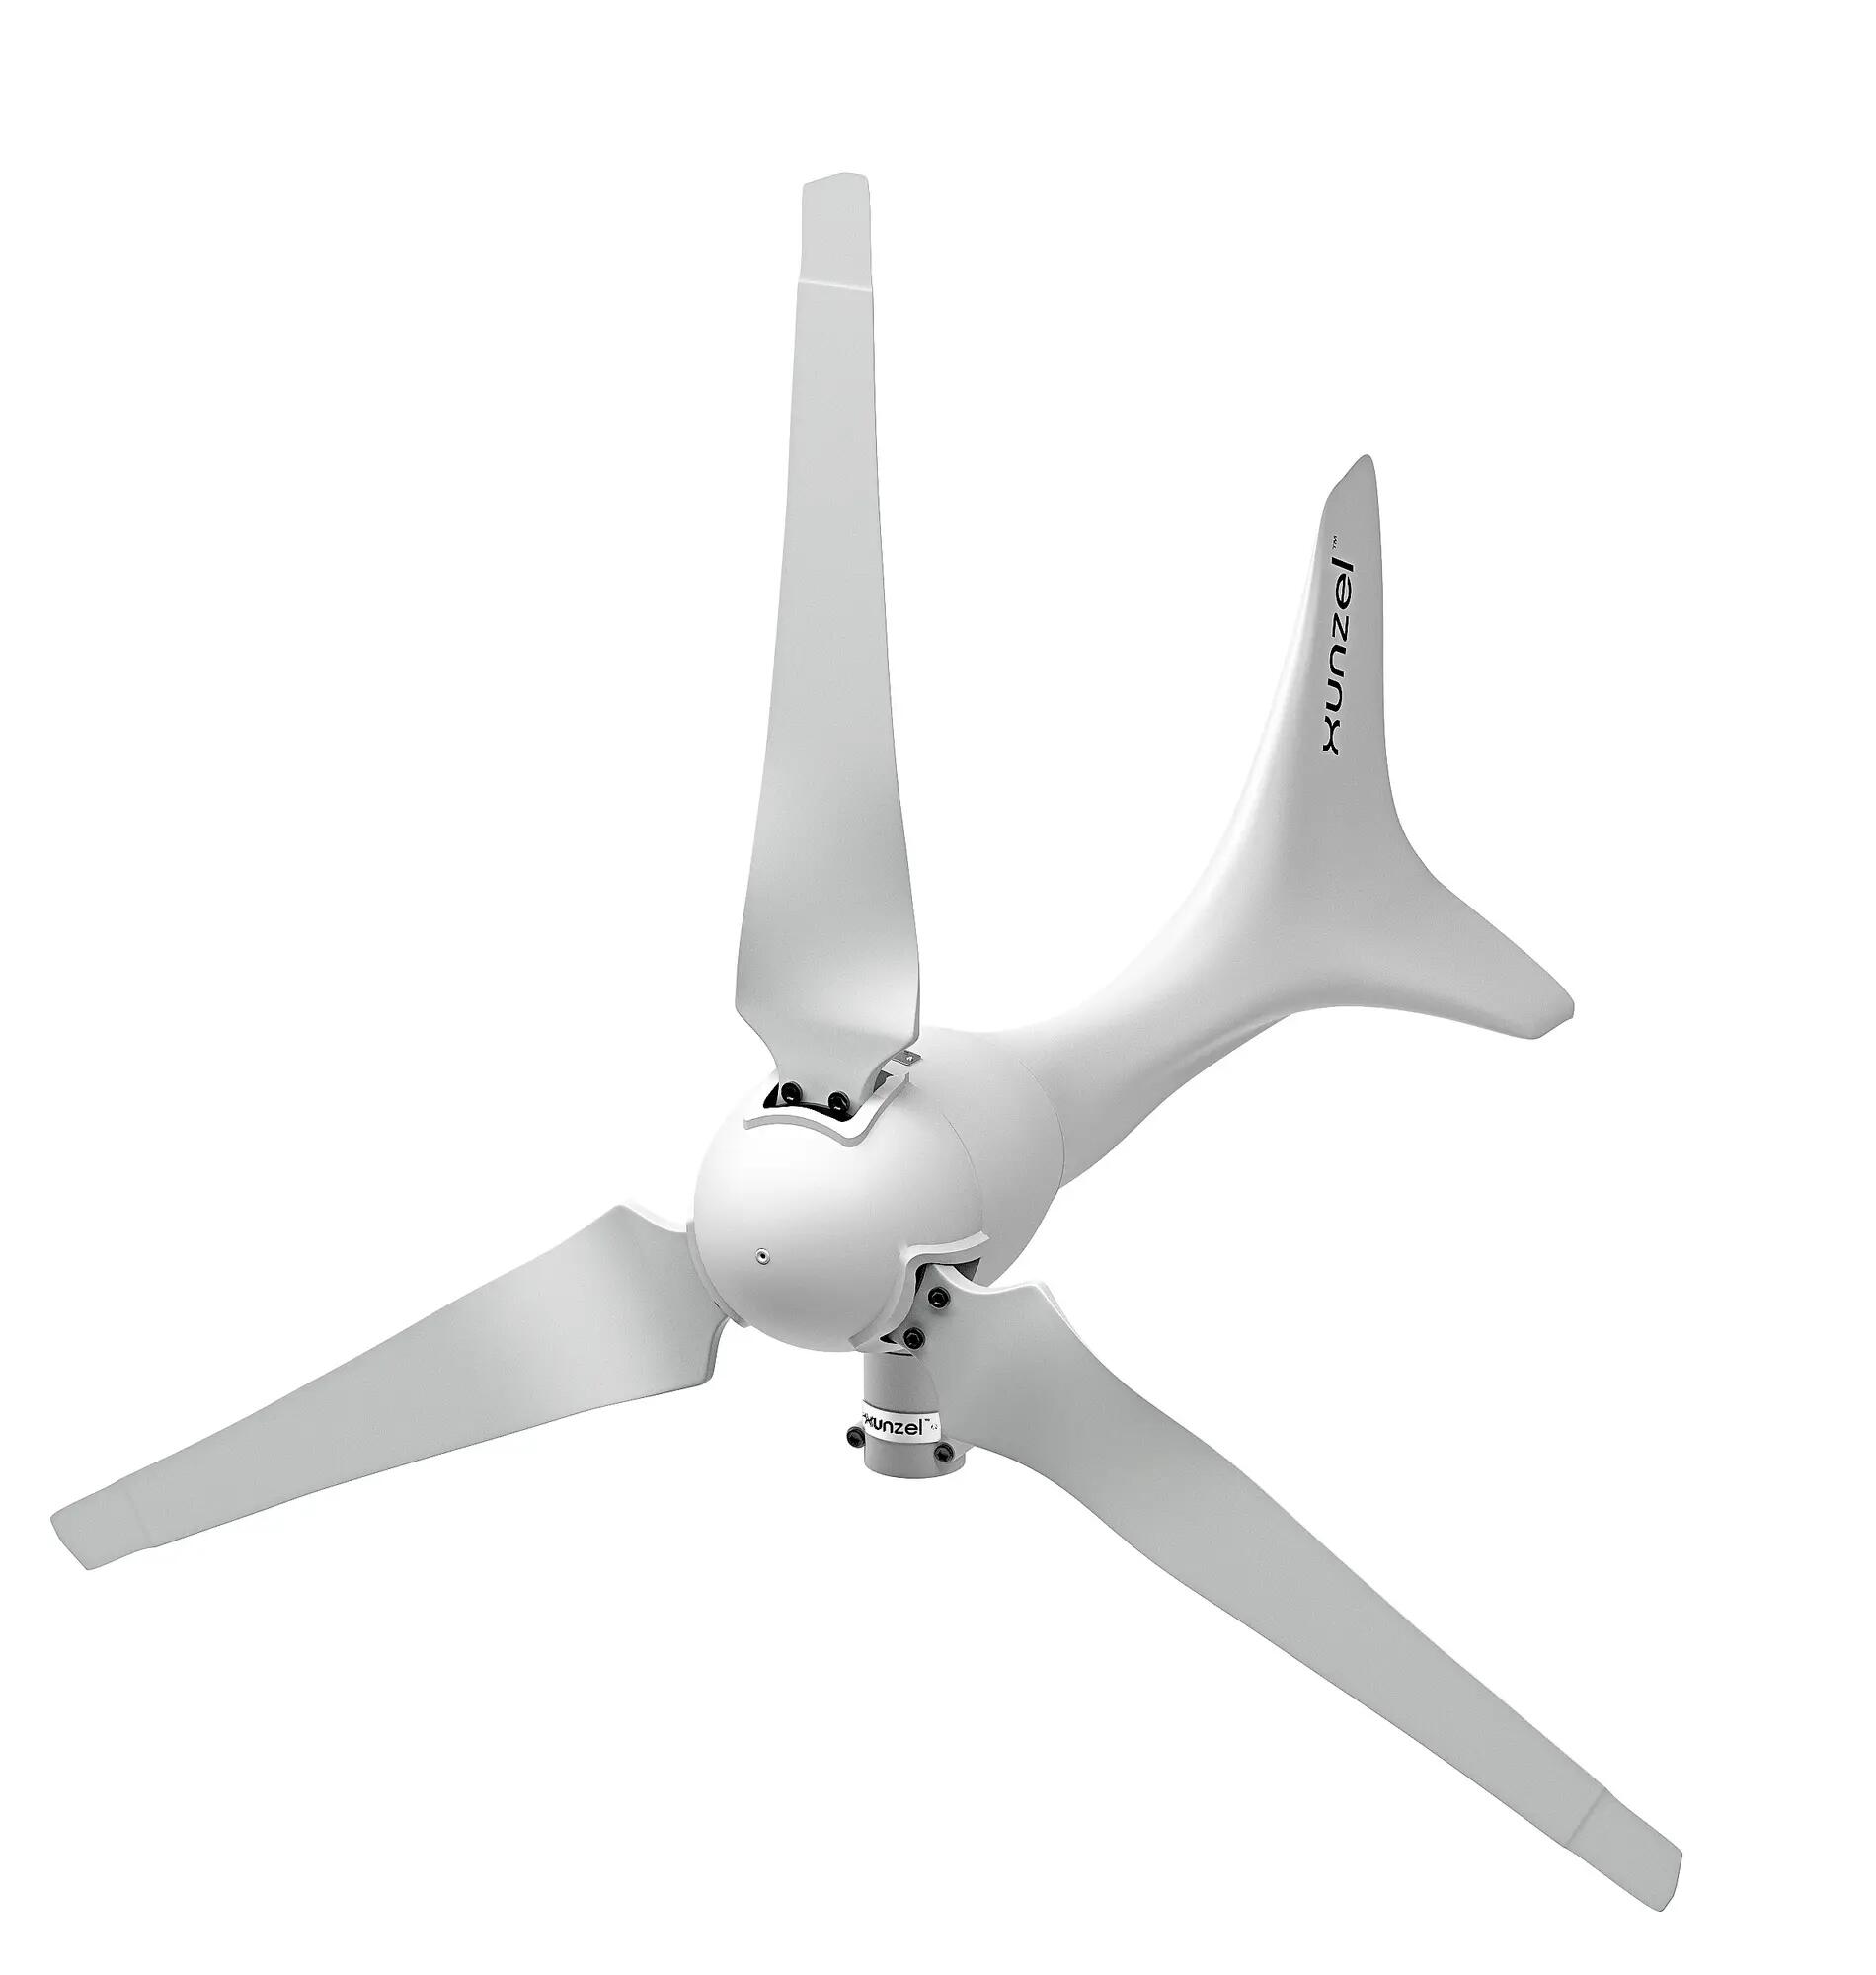 Aerogenerador windforce-xunzel-6000 12/24v 600wp hasta 45kwh/mes